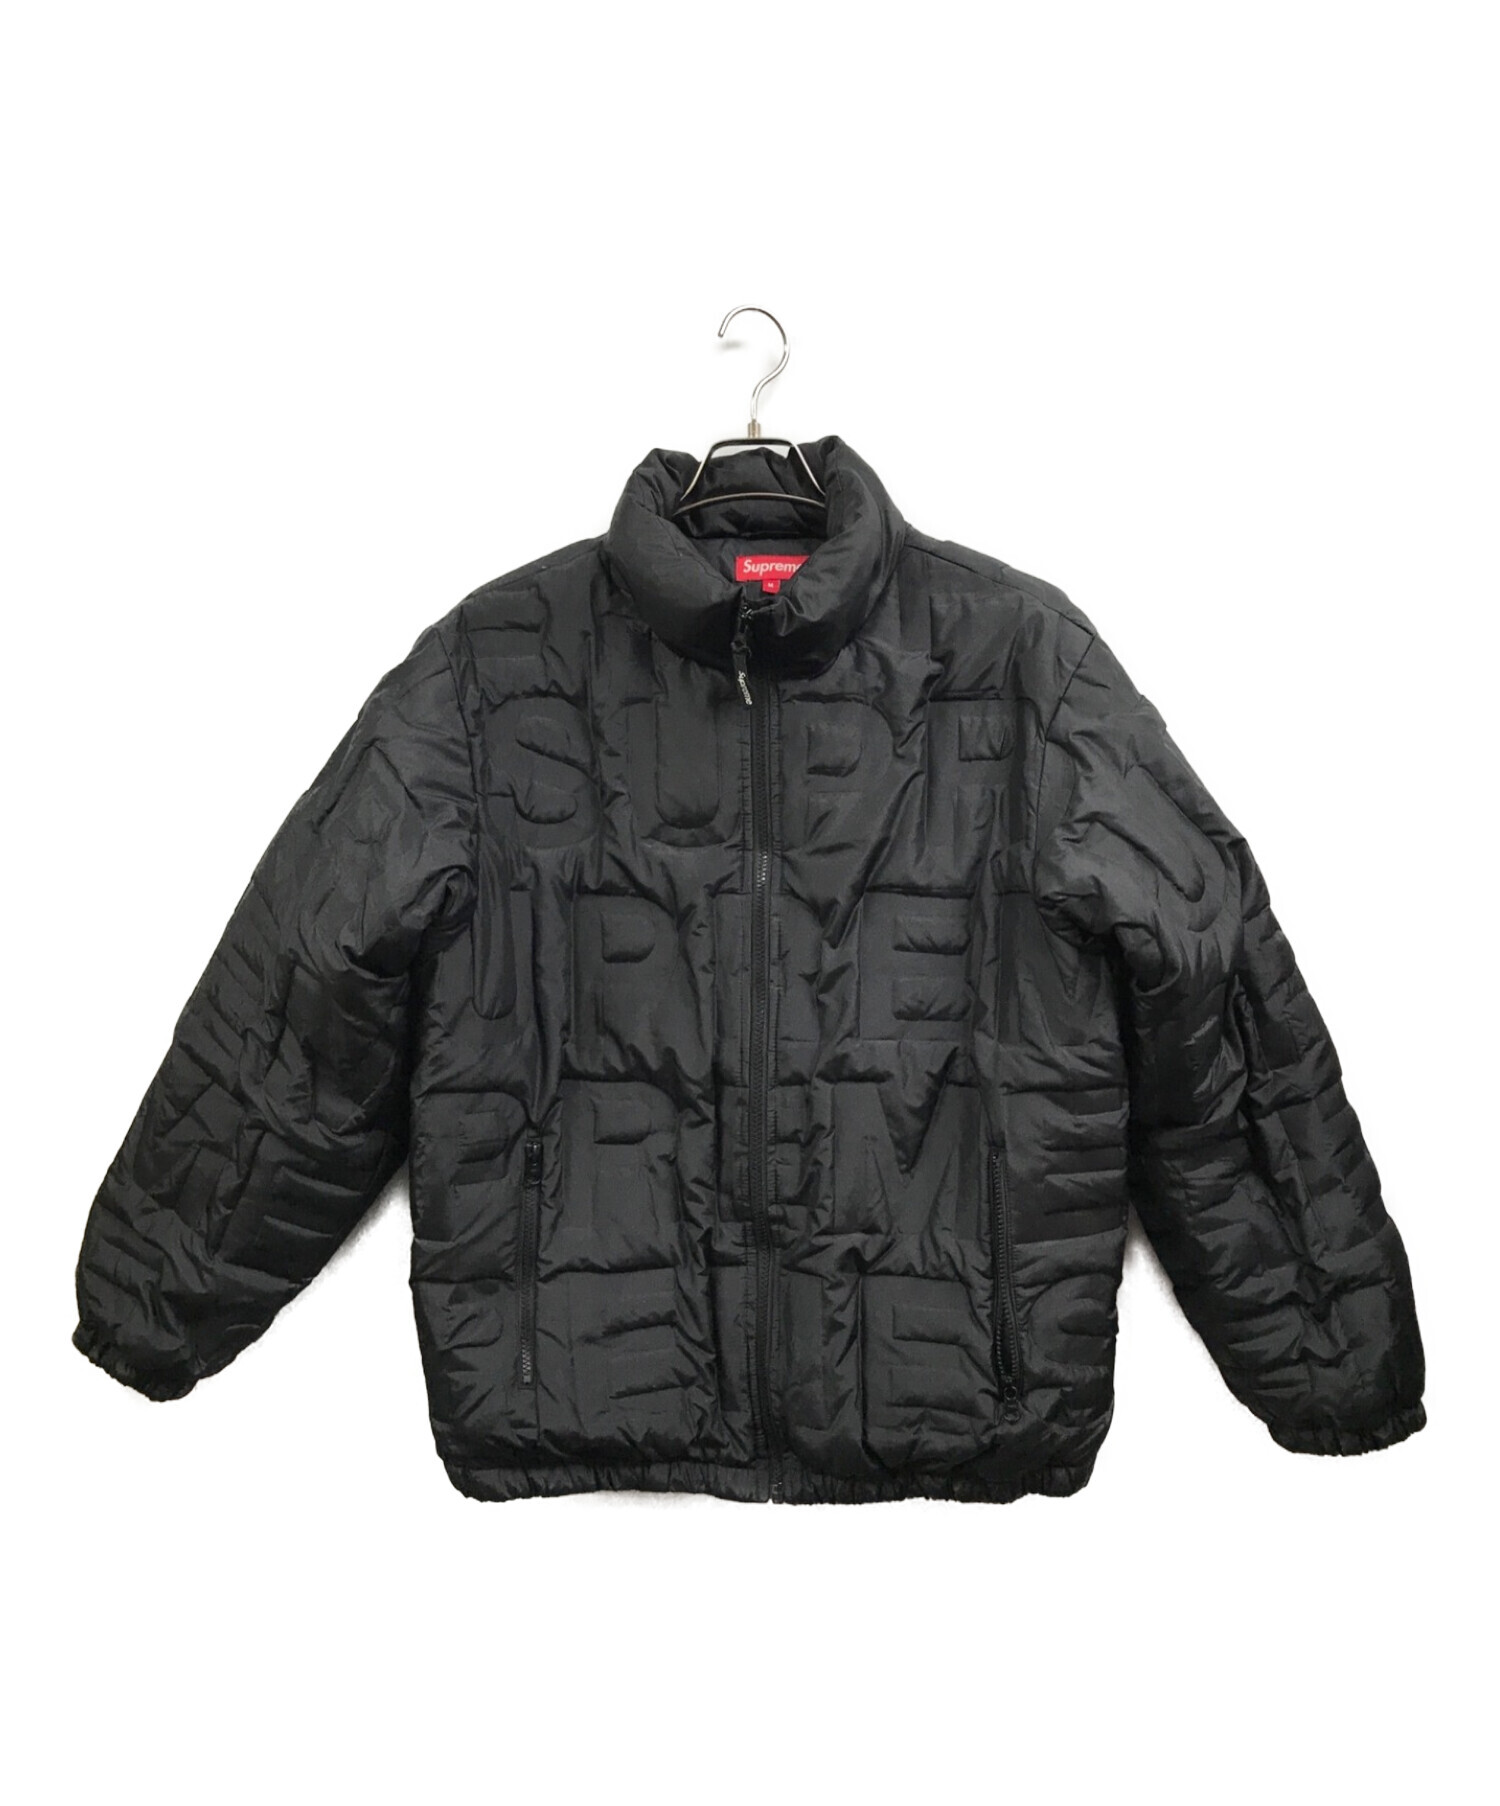 supreme bonded logo puffy jacket M - ダウンジャケット